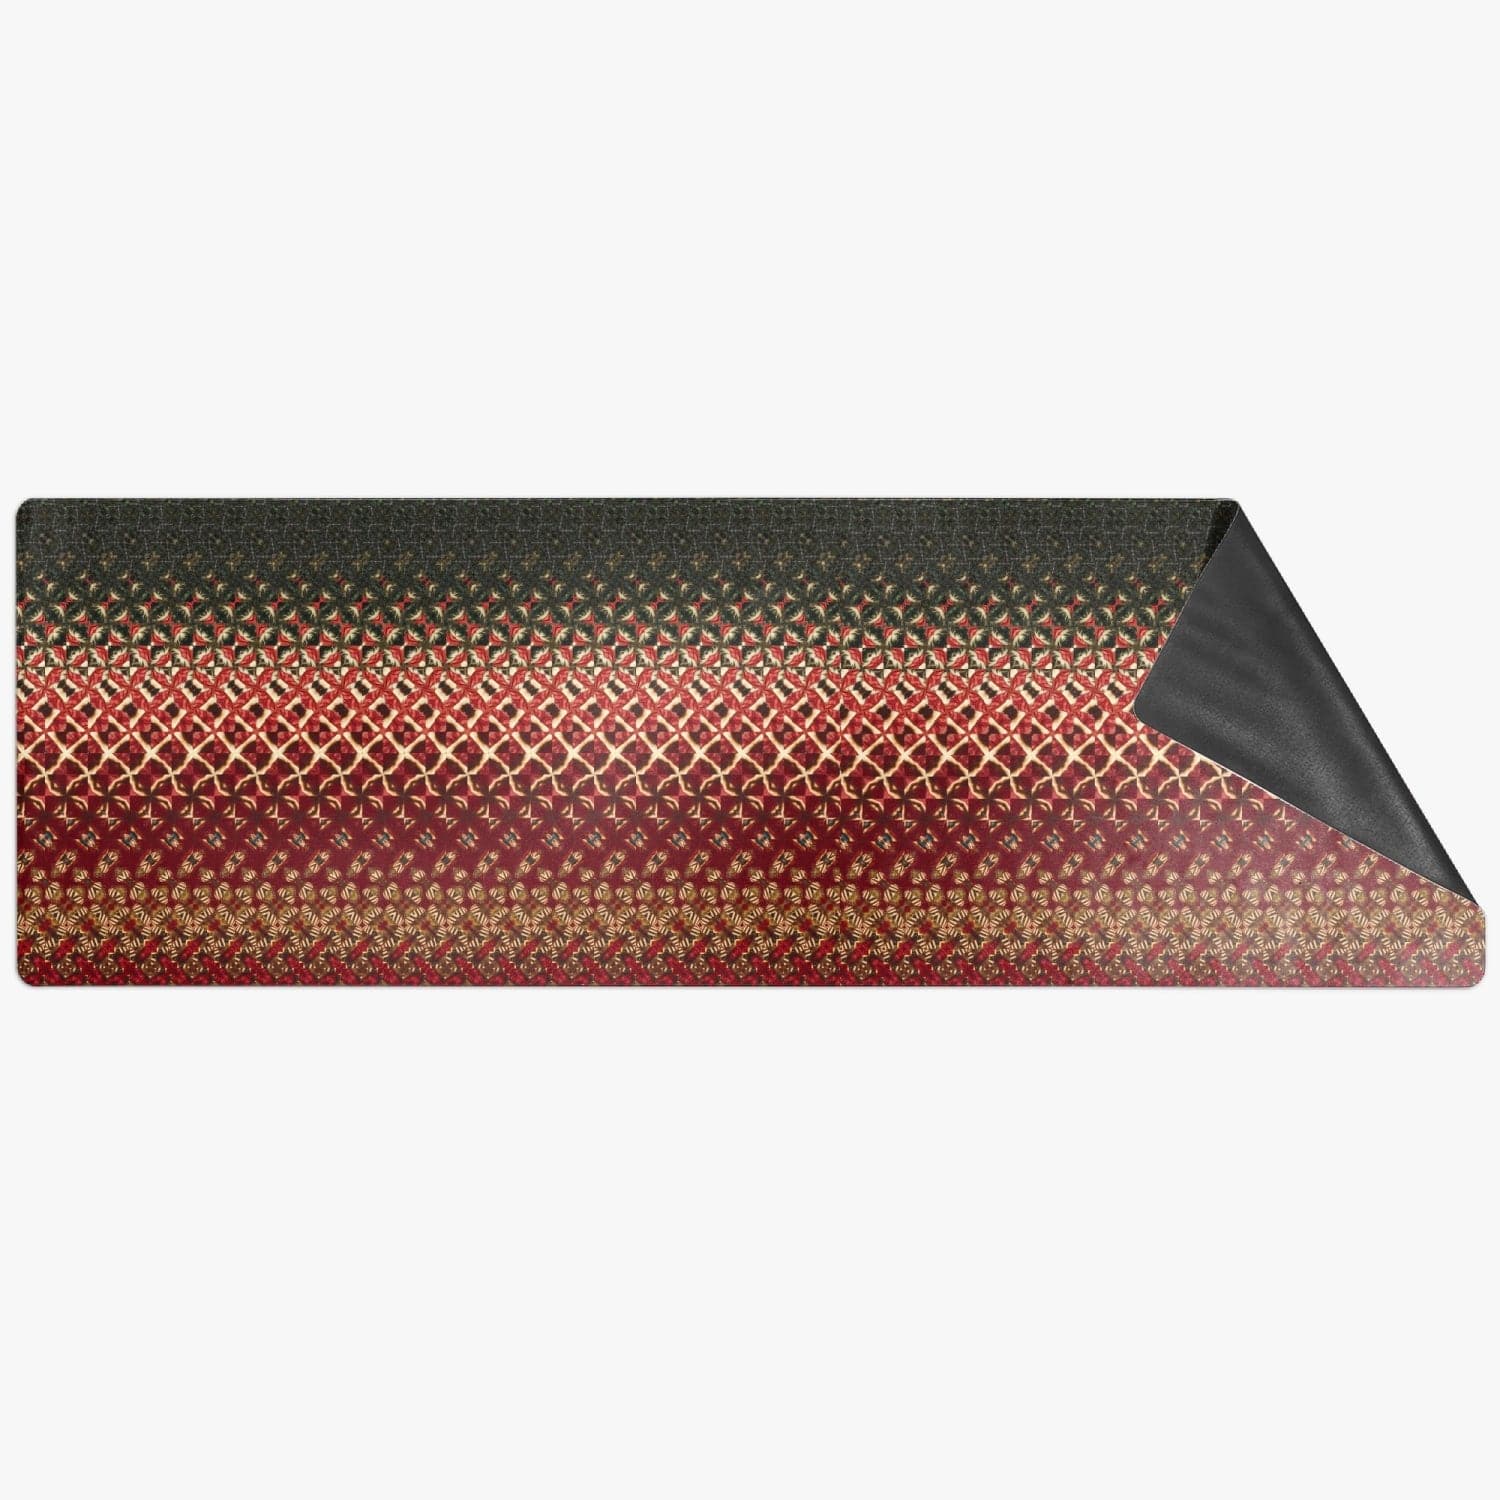 Red and green stylish designed  Suede Anti-slip Yoga Mat, by Sensus Studio Design